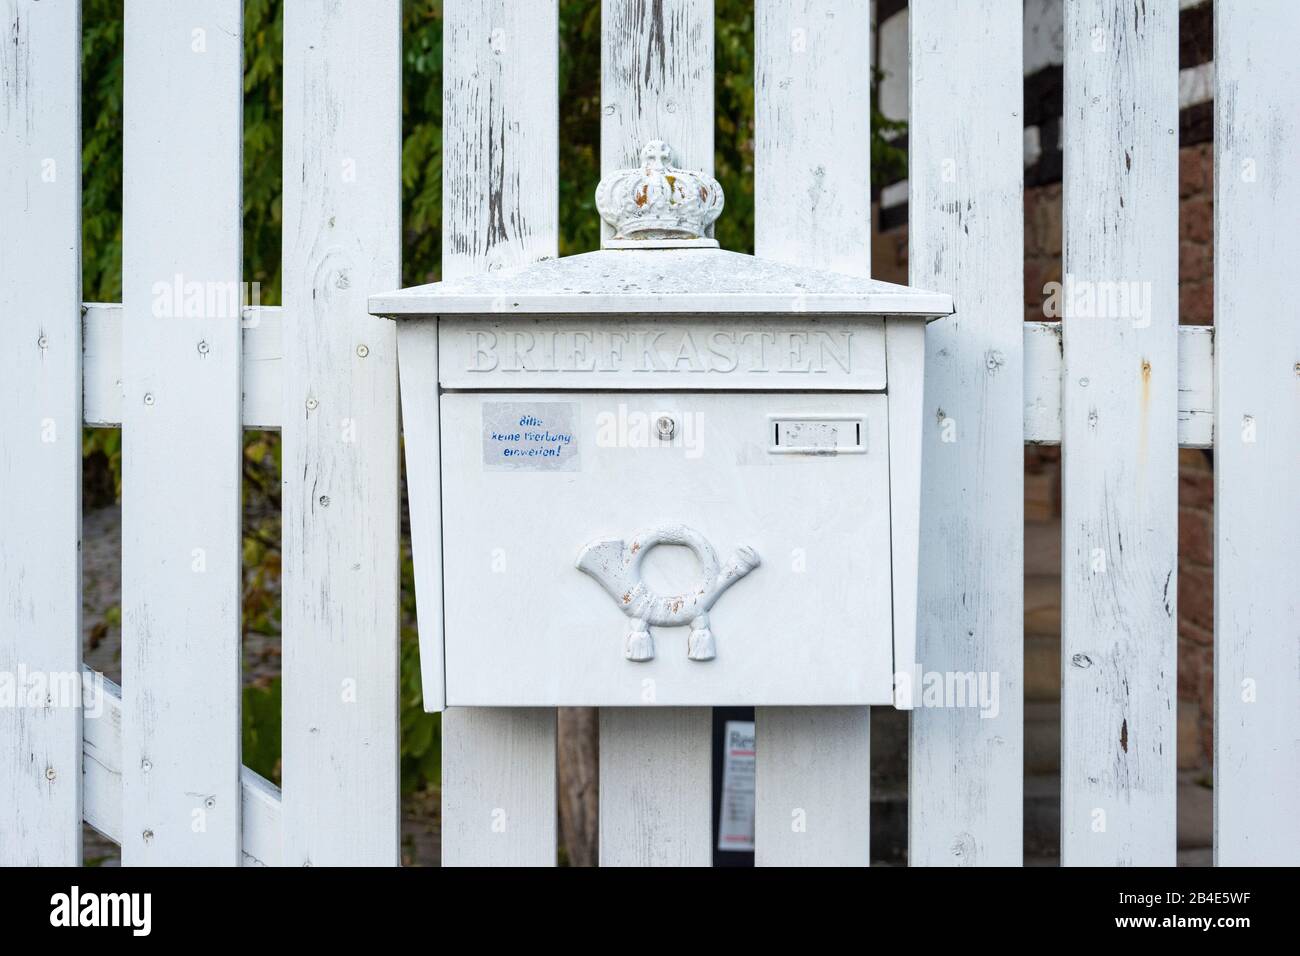 Germania, Rheinlandpfalz, Gleiszellen-Gleishorbach, casella postale presso un cancello da giardino. Foto Stock